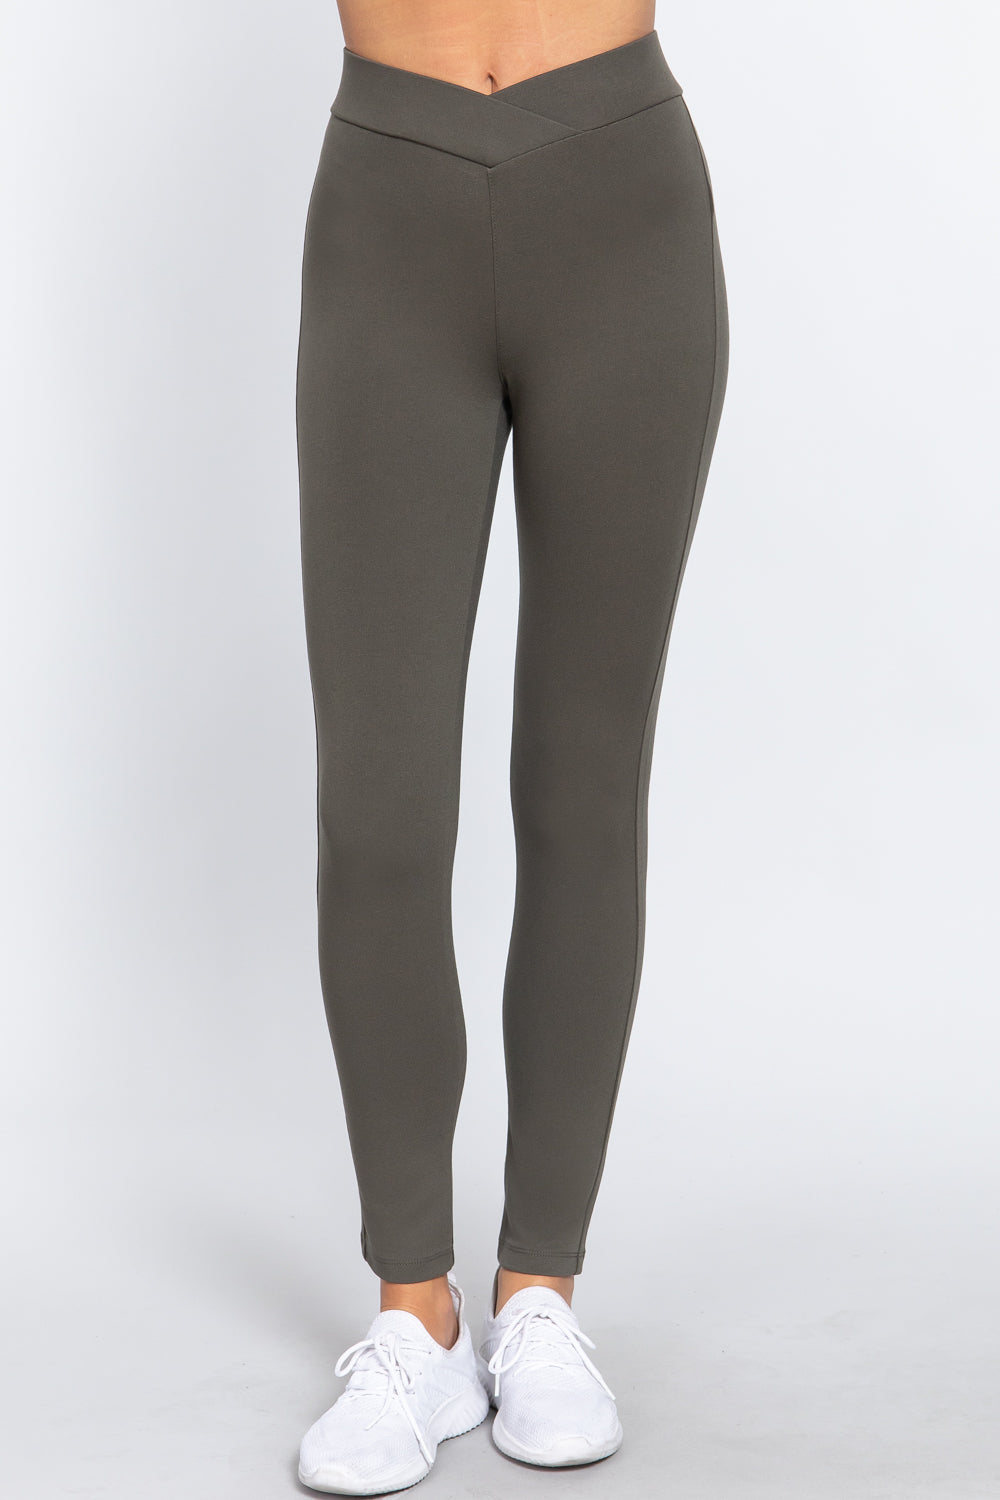 Mid-rise Ponte Pants-57480.S-Select Size: S, M, L-Love It Clothing